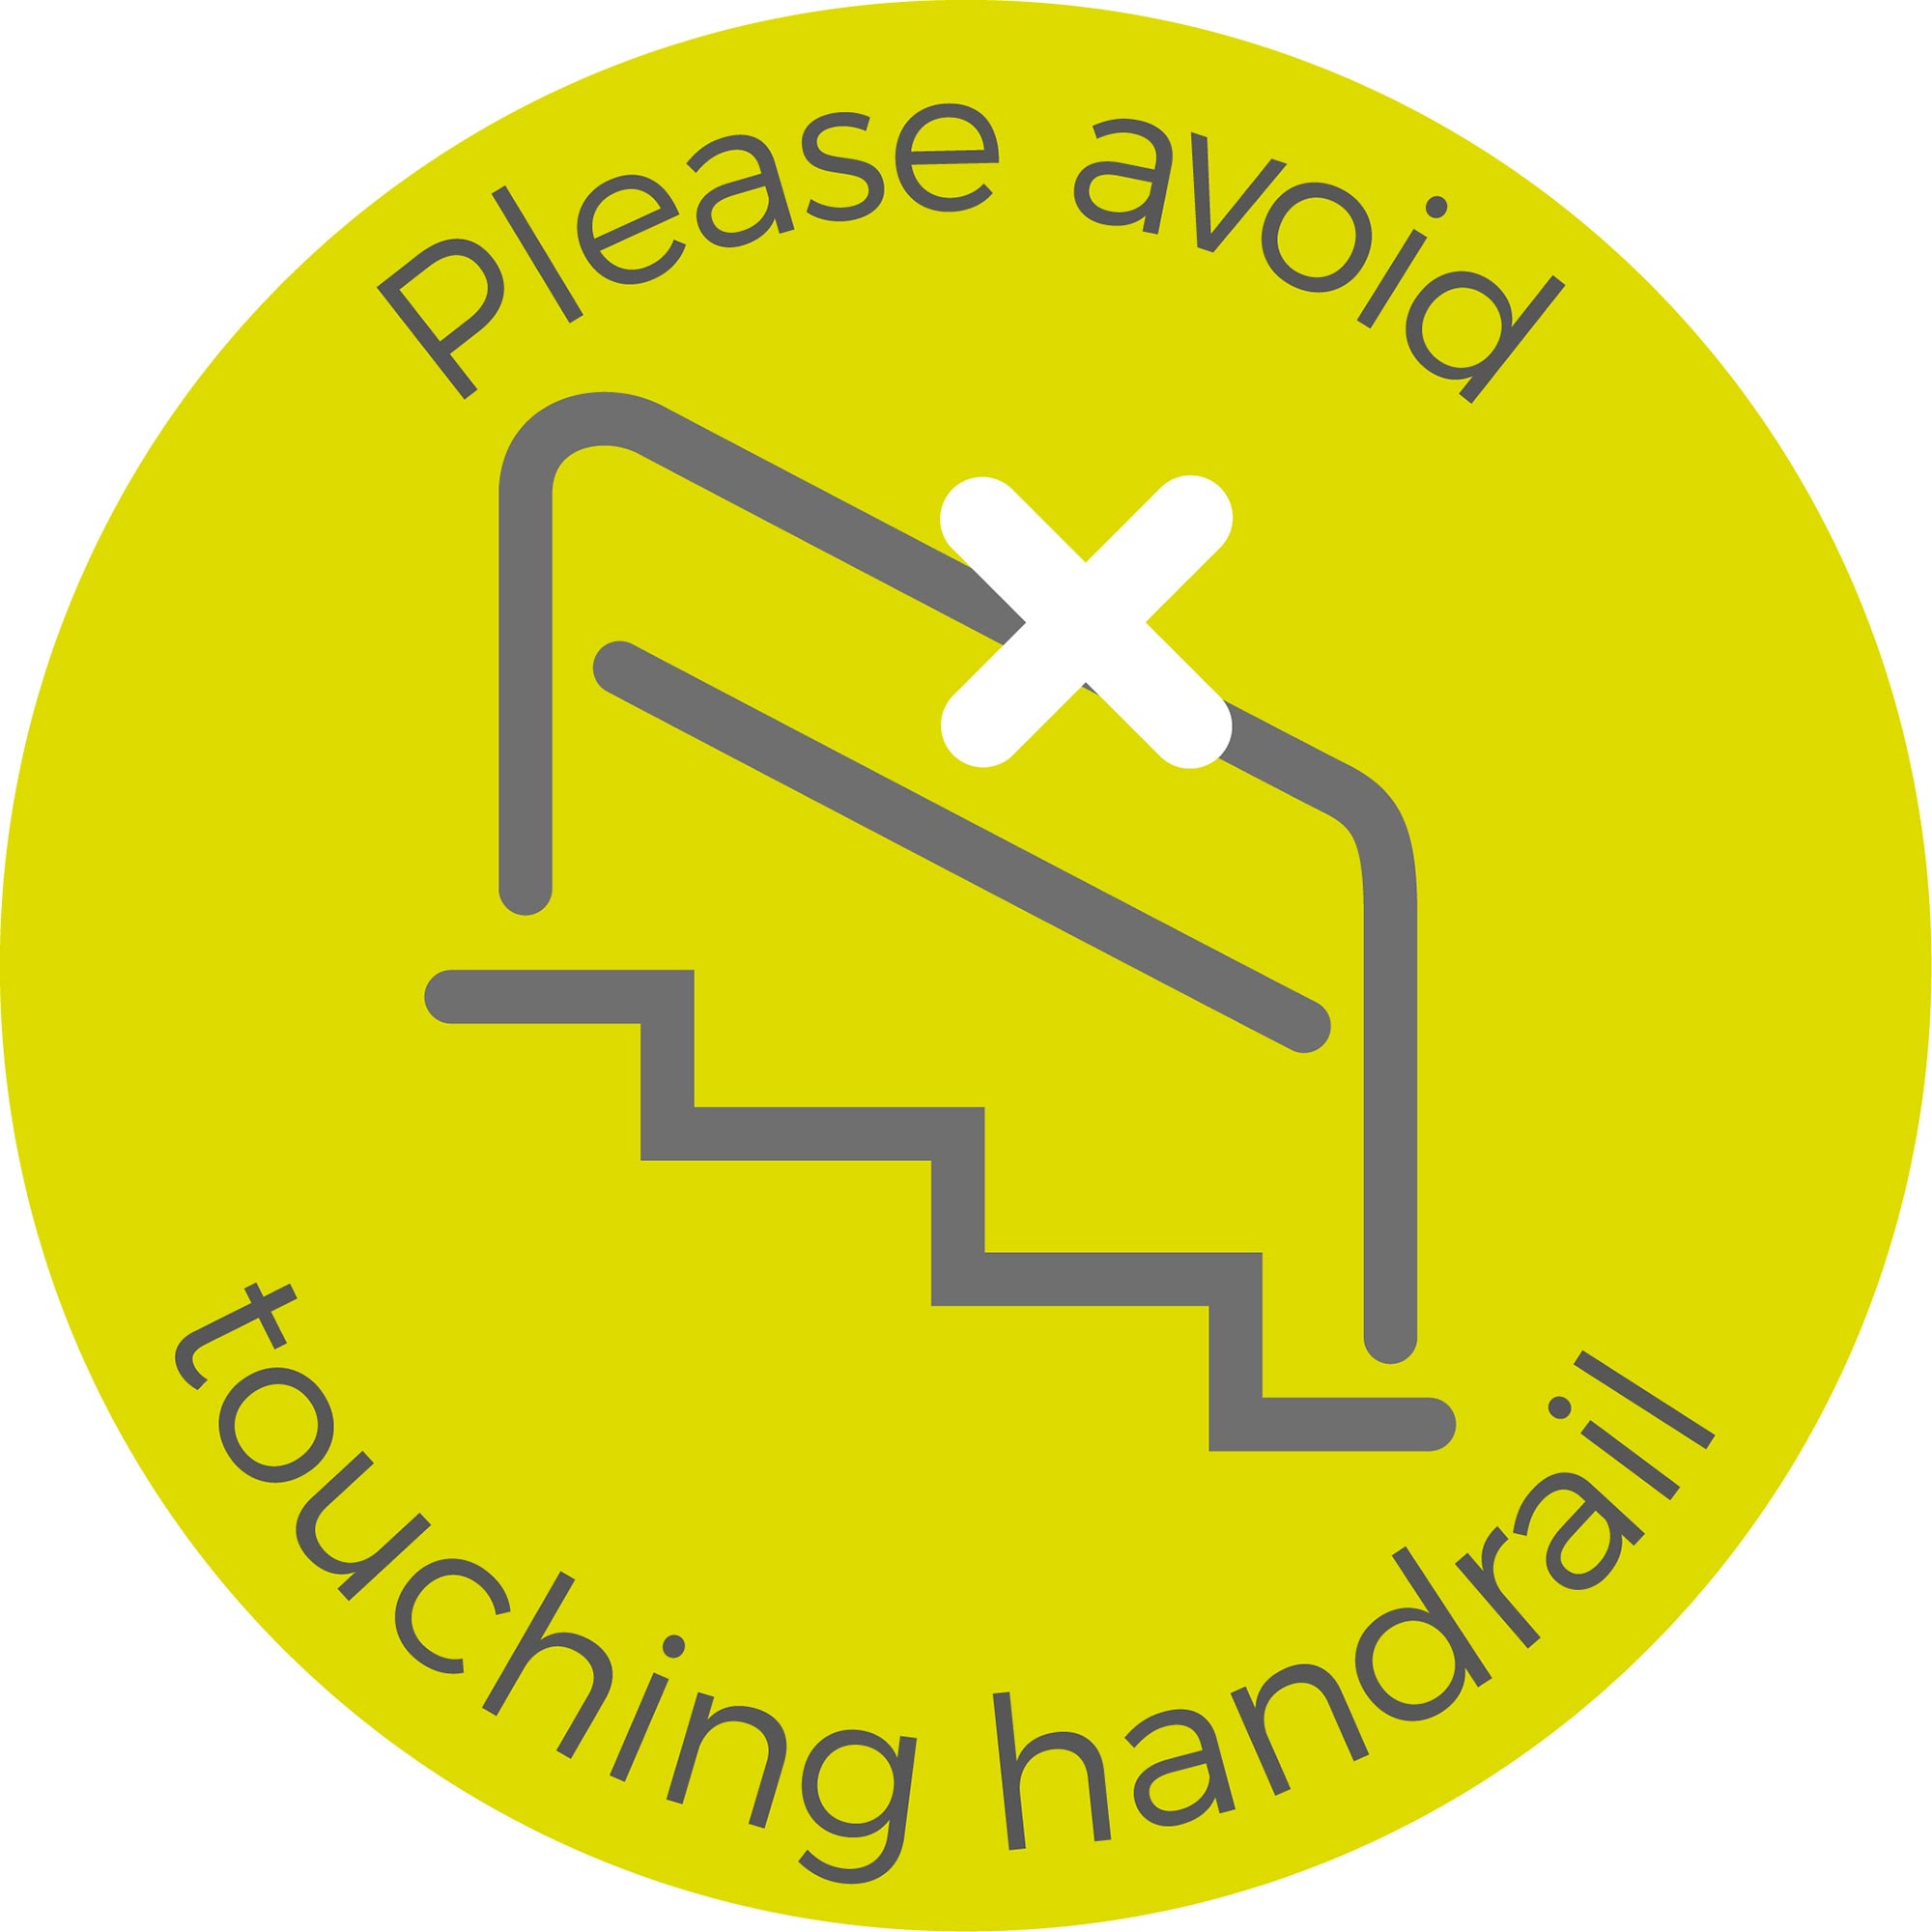 Avoid Touching Handrails - Green